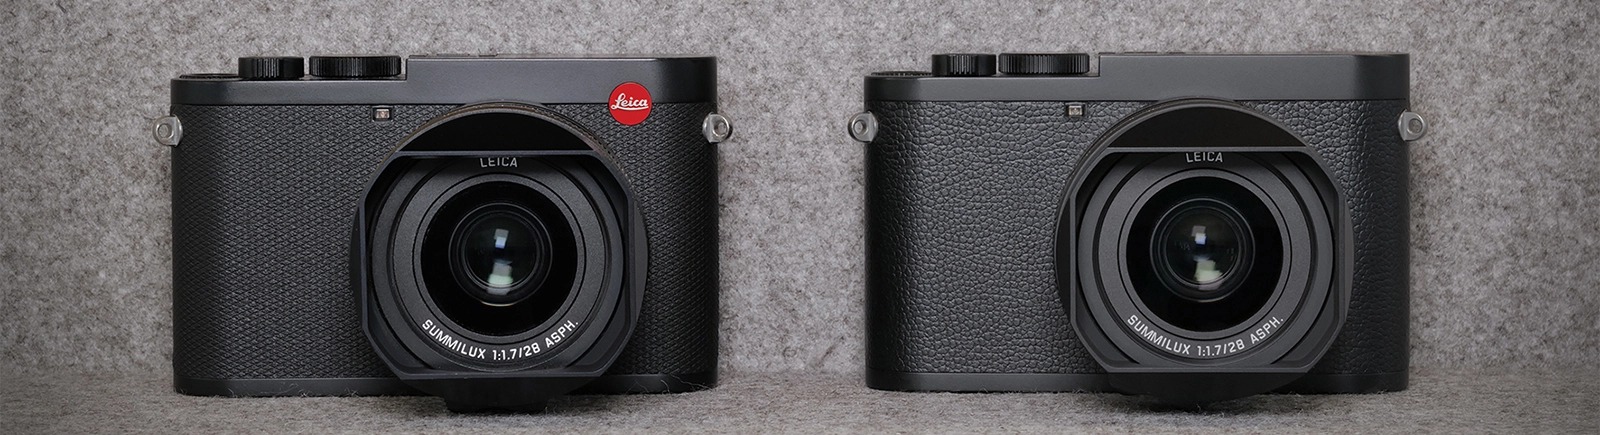 Leica-q2-monochrom3.jpg